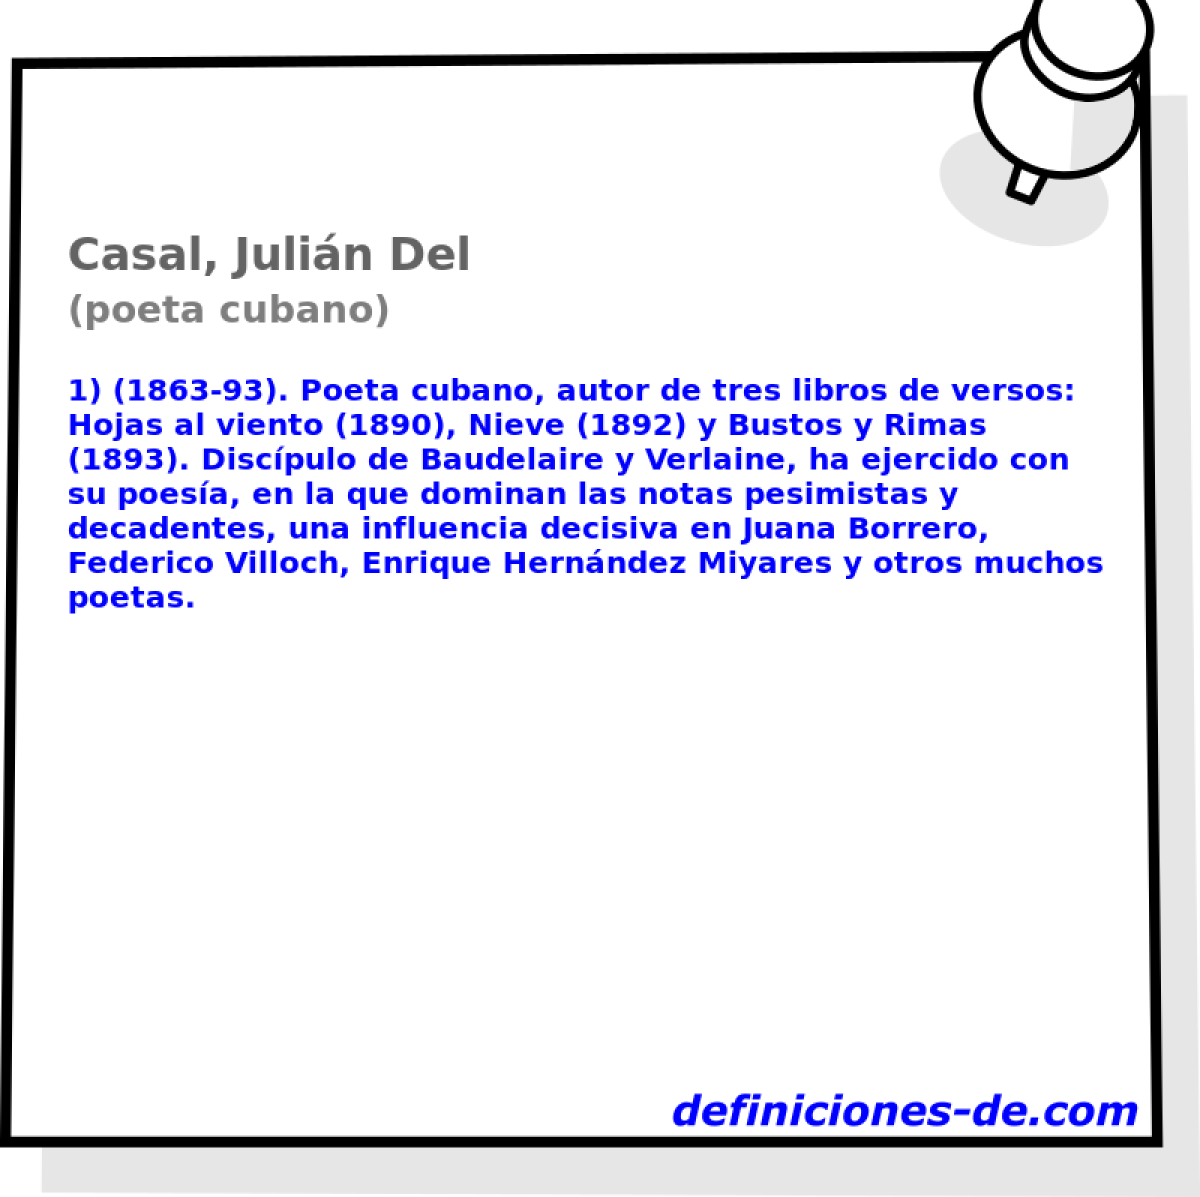 Casal, Julin Del (poeta cubano)